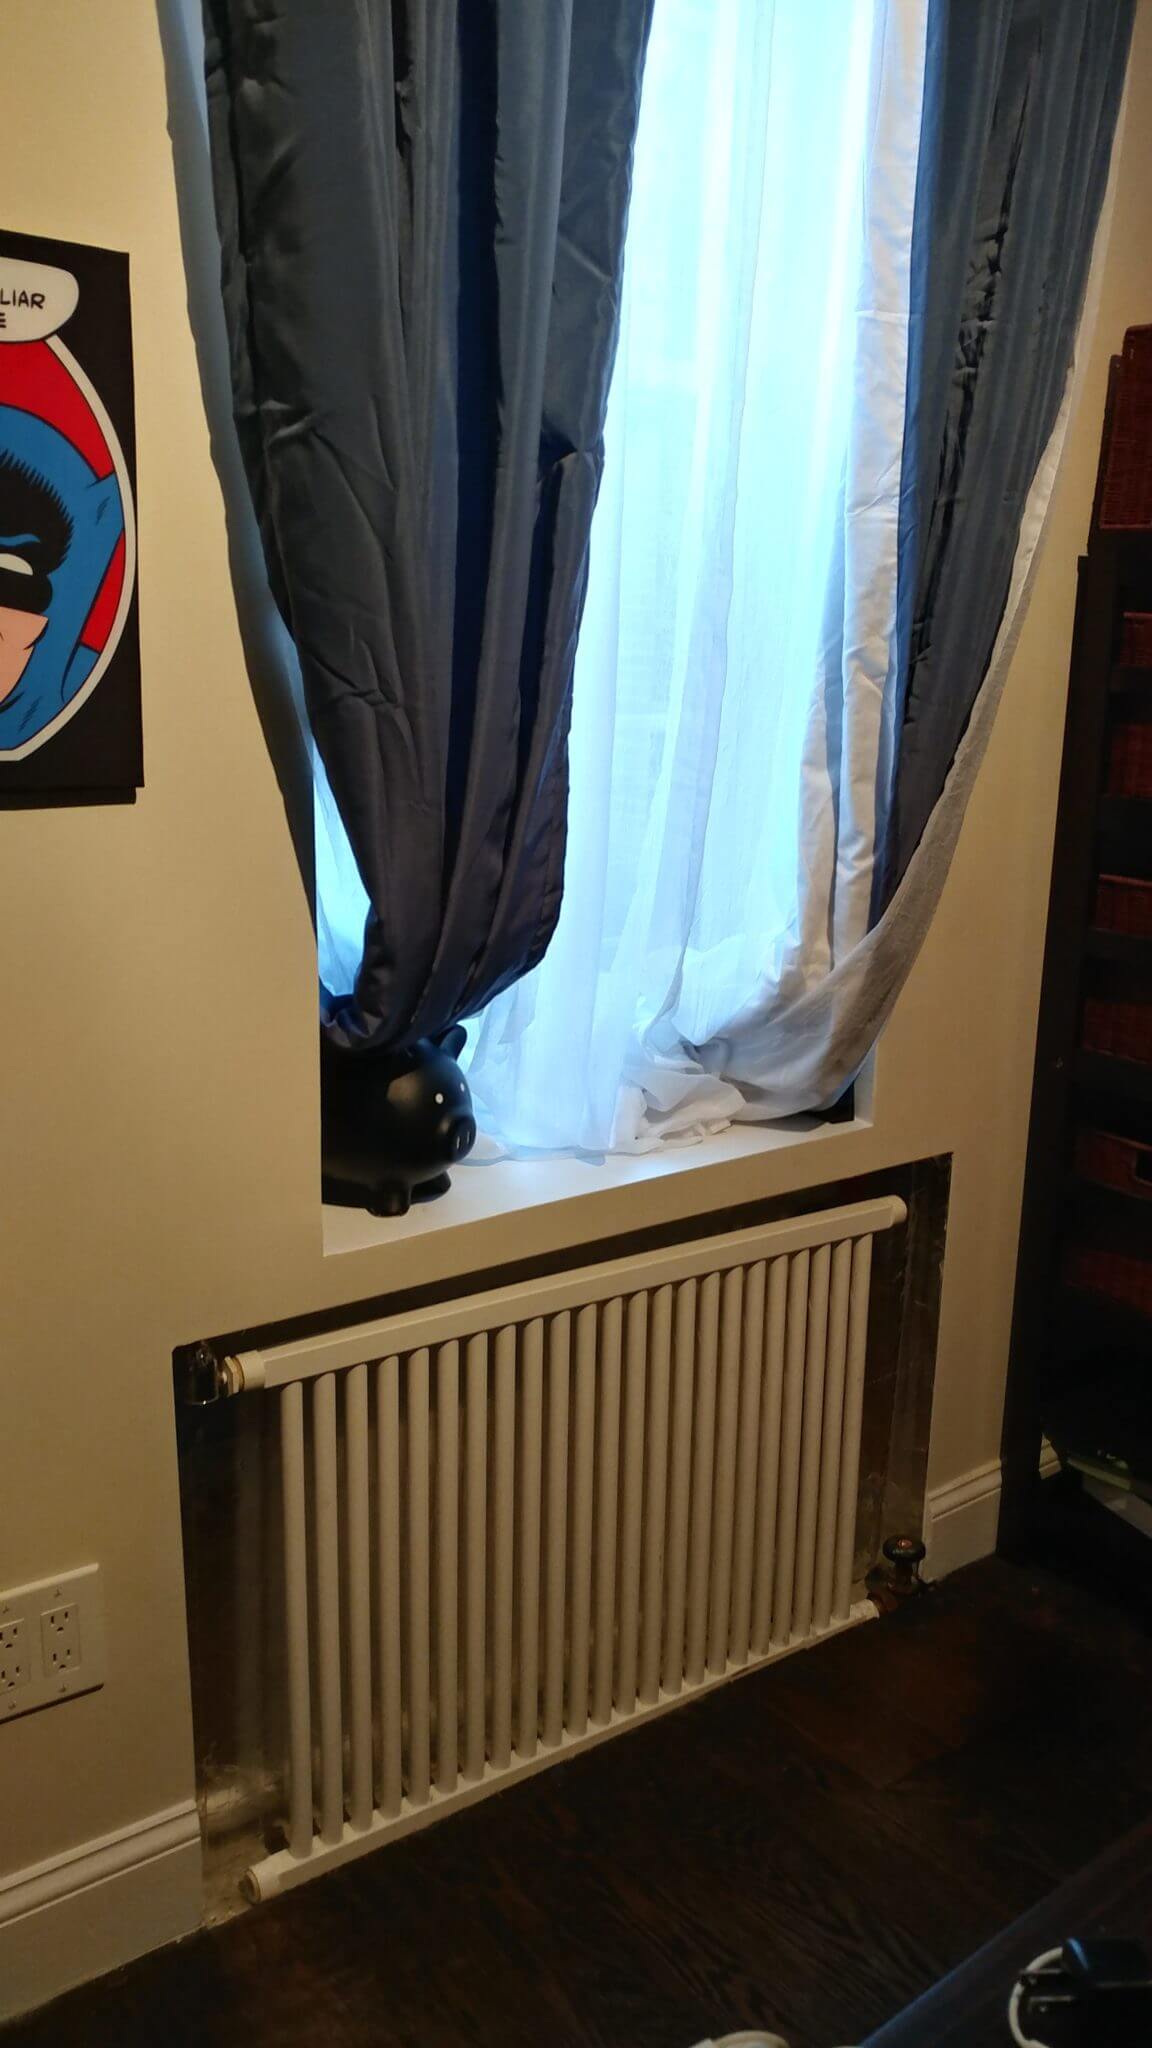 exposed metal radiator under a window